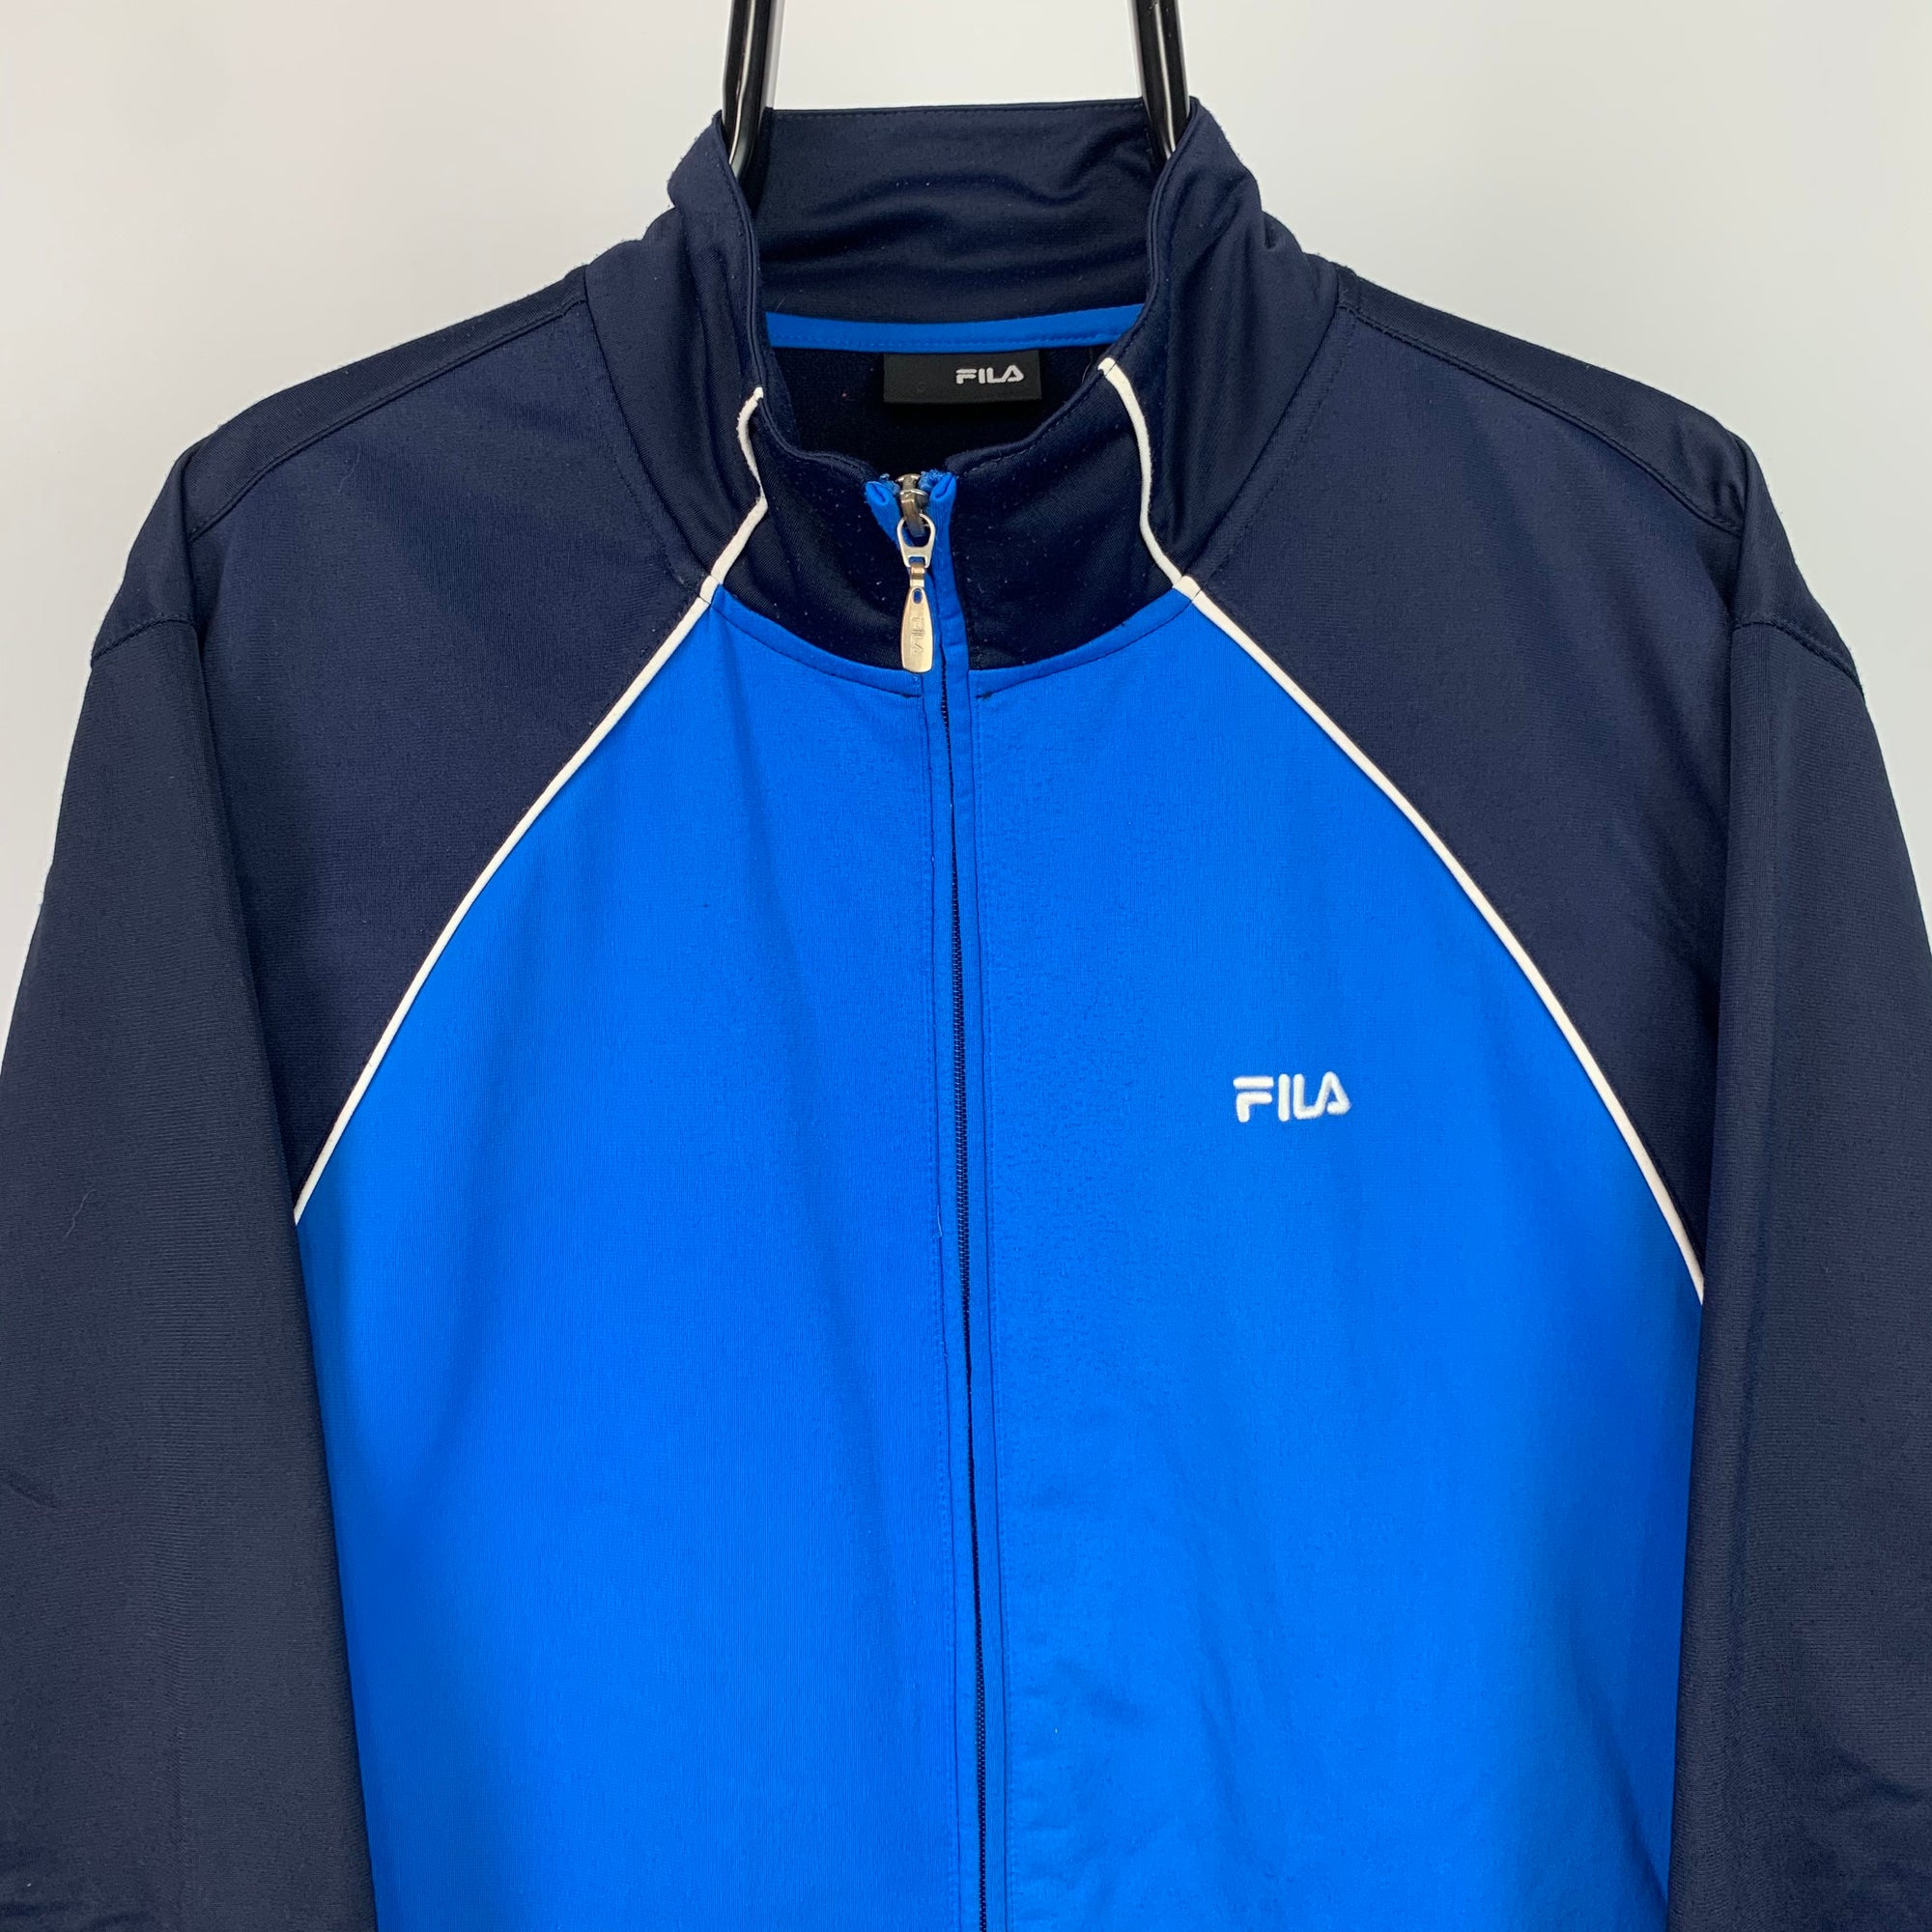 Vintage Fila Track Jacket in Navy/Blue/White - Men's Large/Women's XL